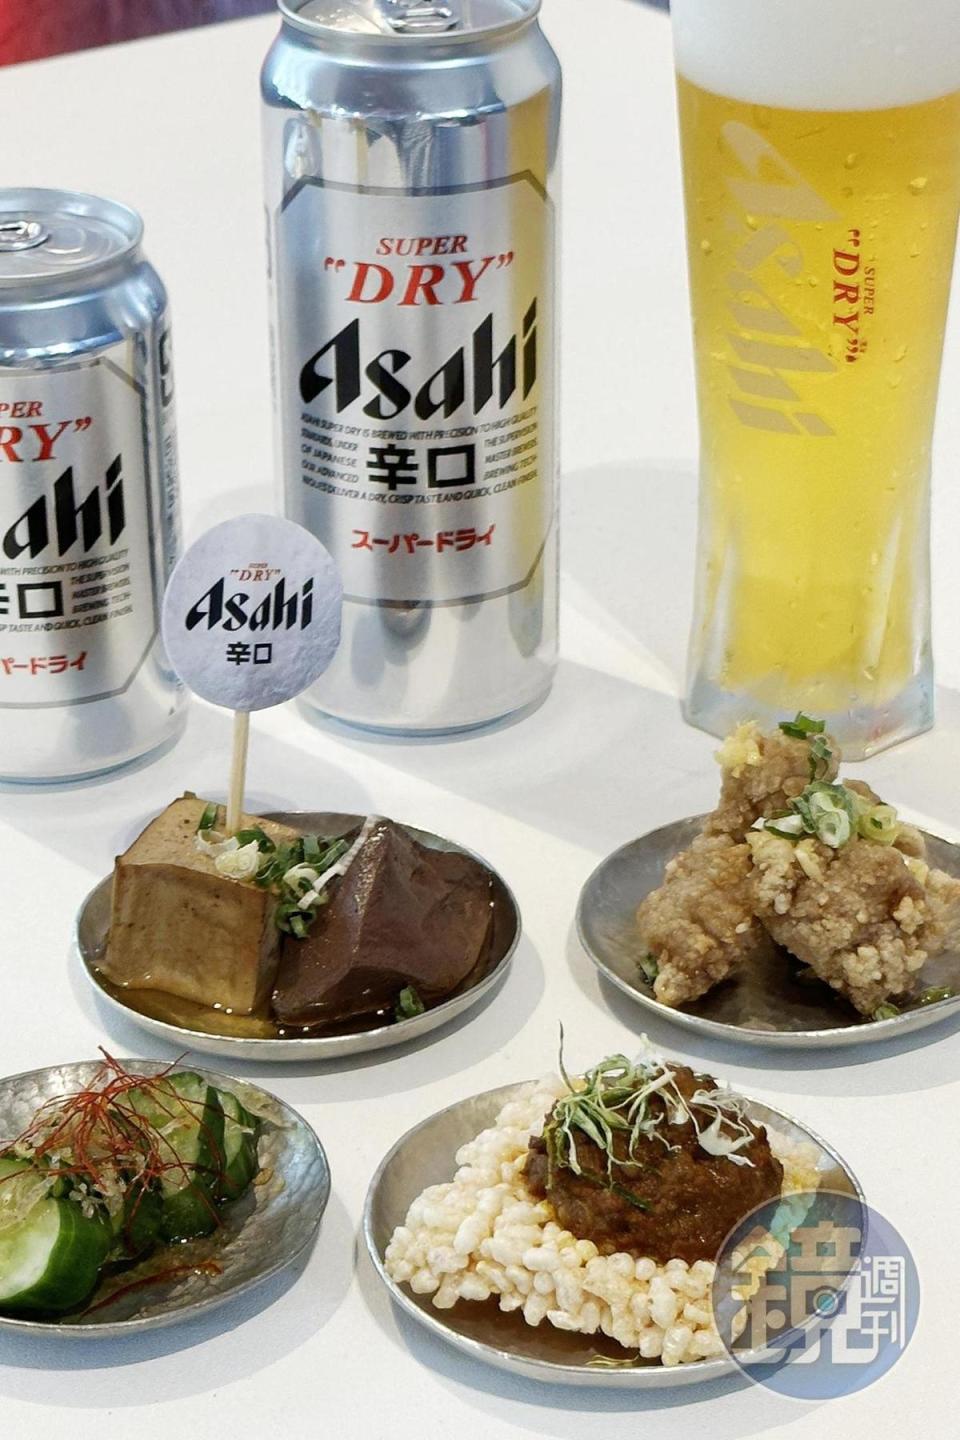 ASAHI SUPER DRY在台北南西商圈設置流快閃吧，以及一系列品牌活動，包括領取暢快地圖杯墊，可在中山區合作酒吧獲得啤酒買一送一優惠。